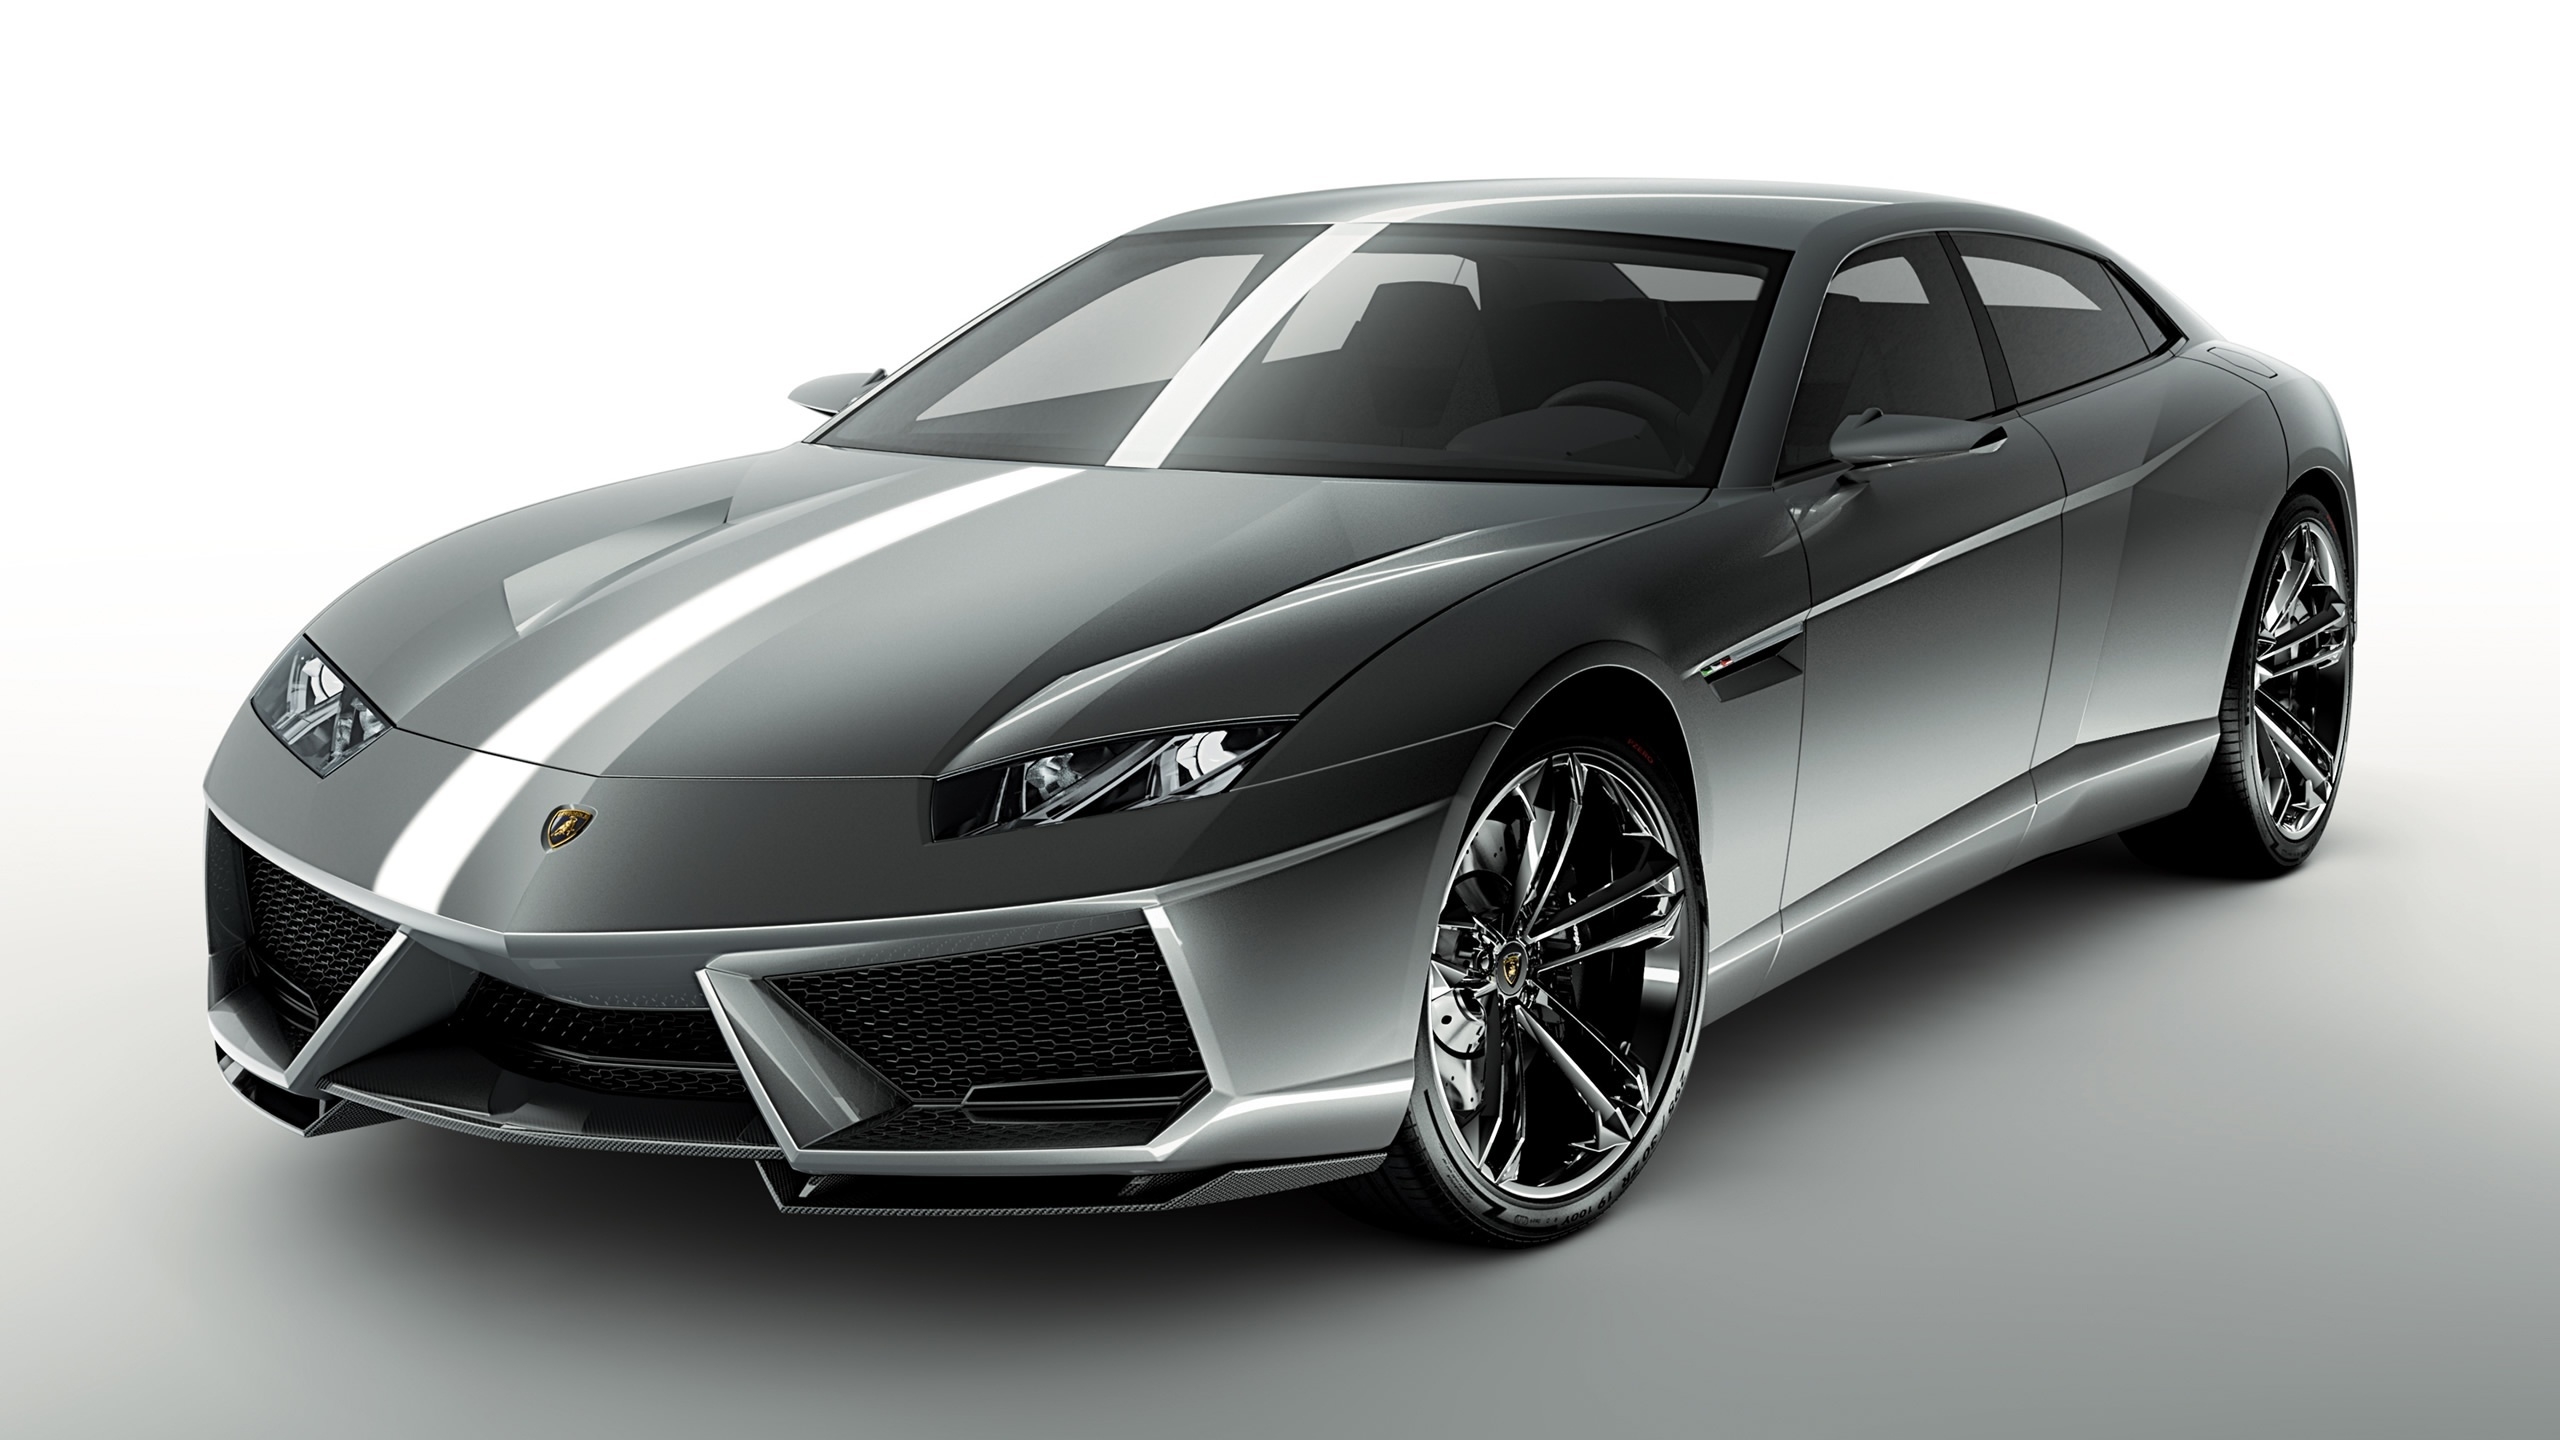 Lamborghini Estoque for 2560x1440 HDTV resolution